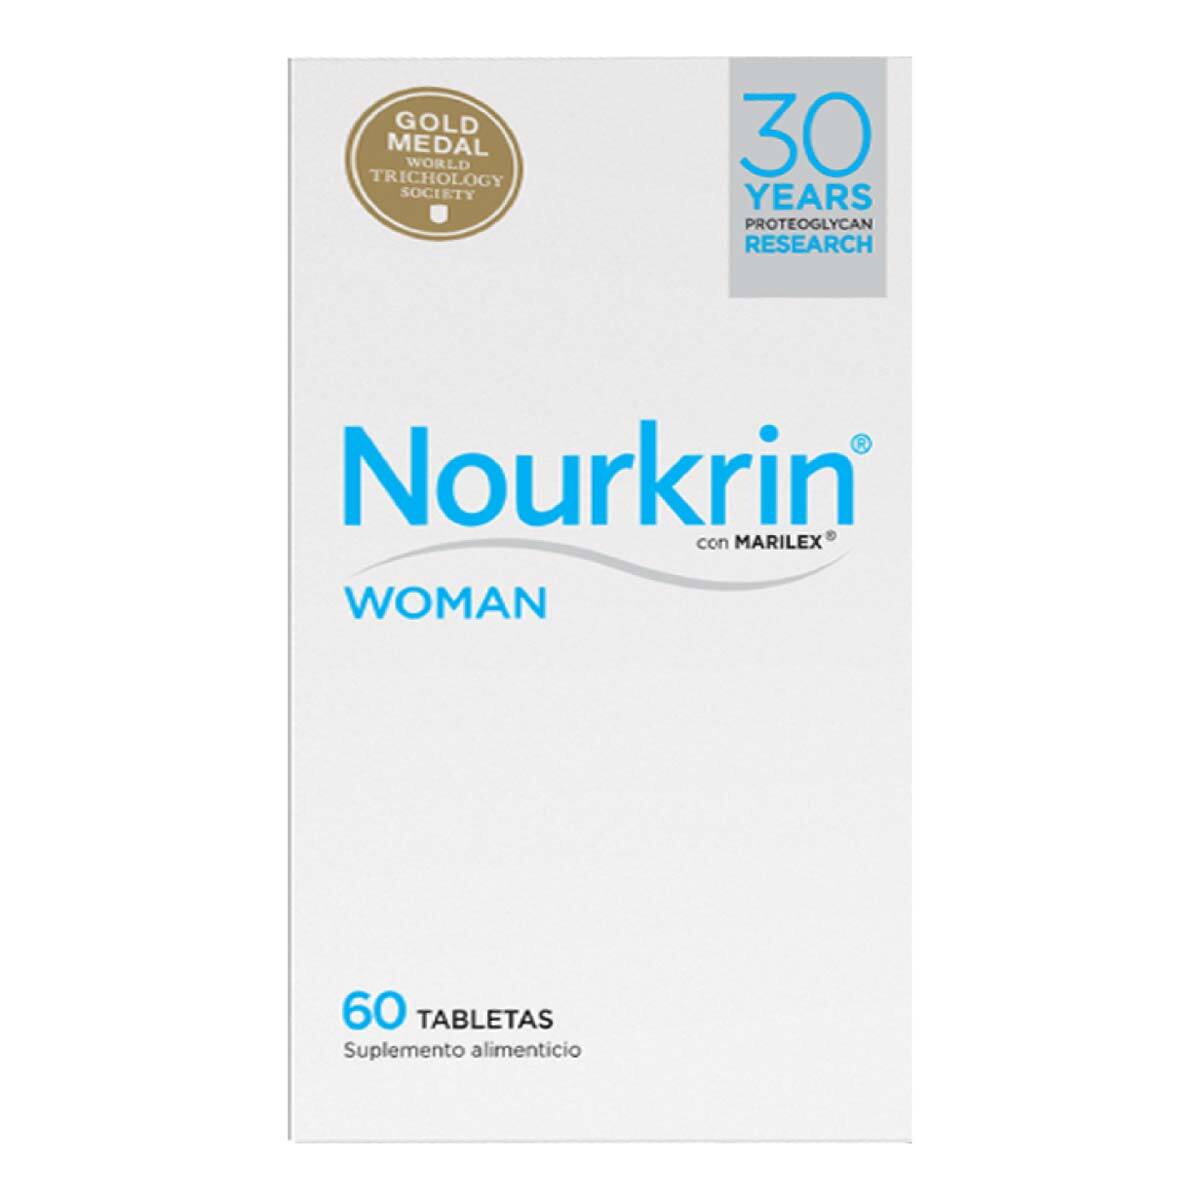 Nourkrin woman 60 Tabletas